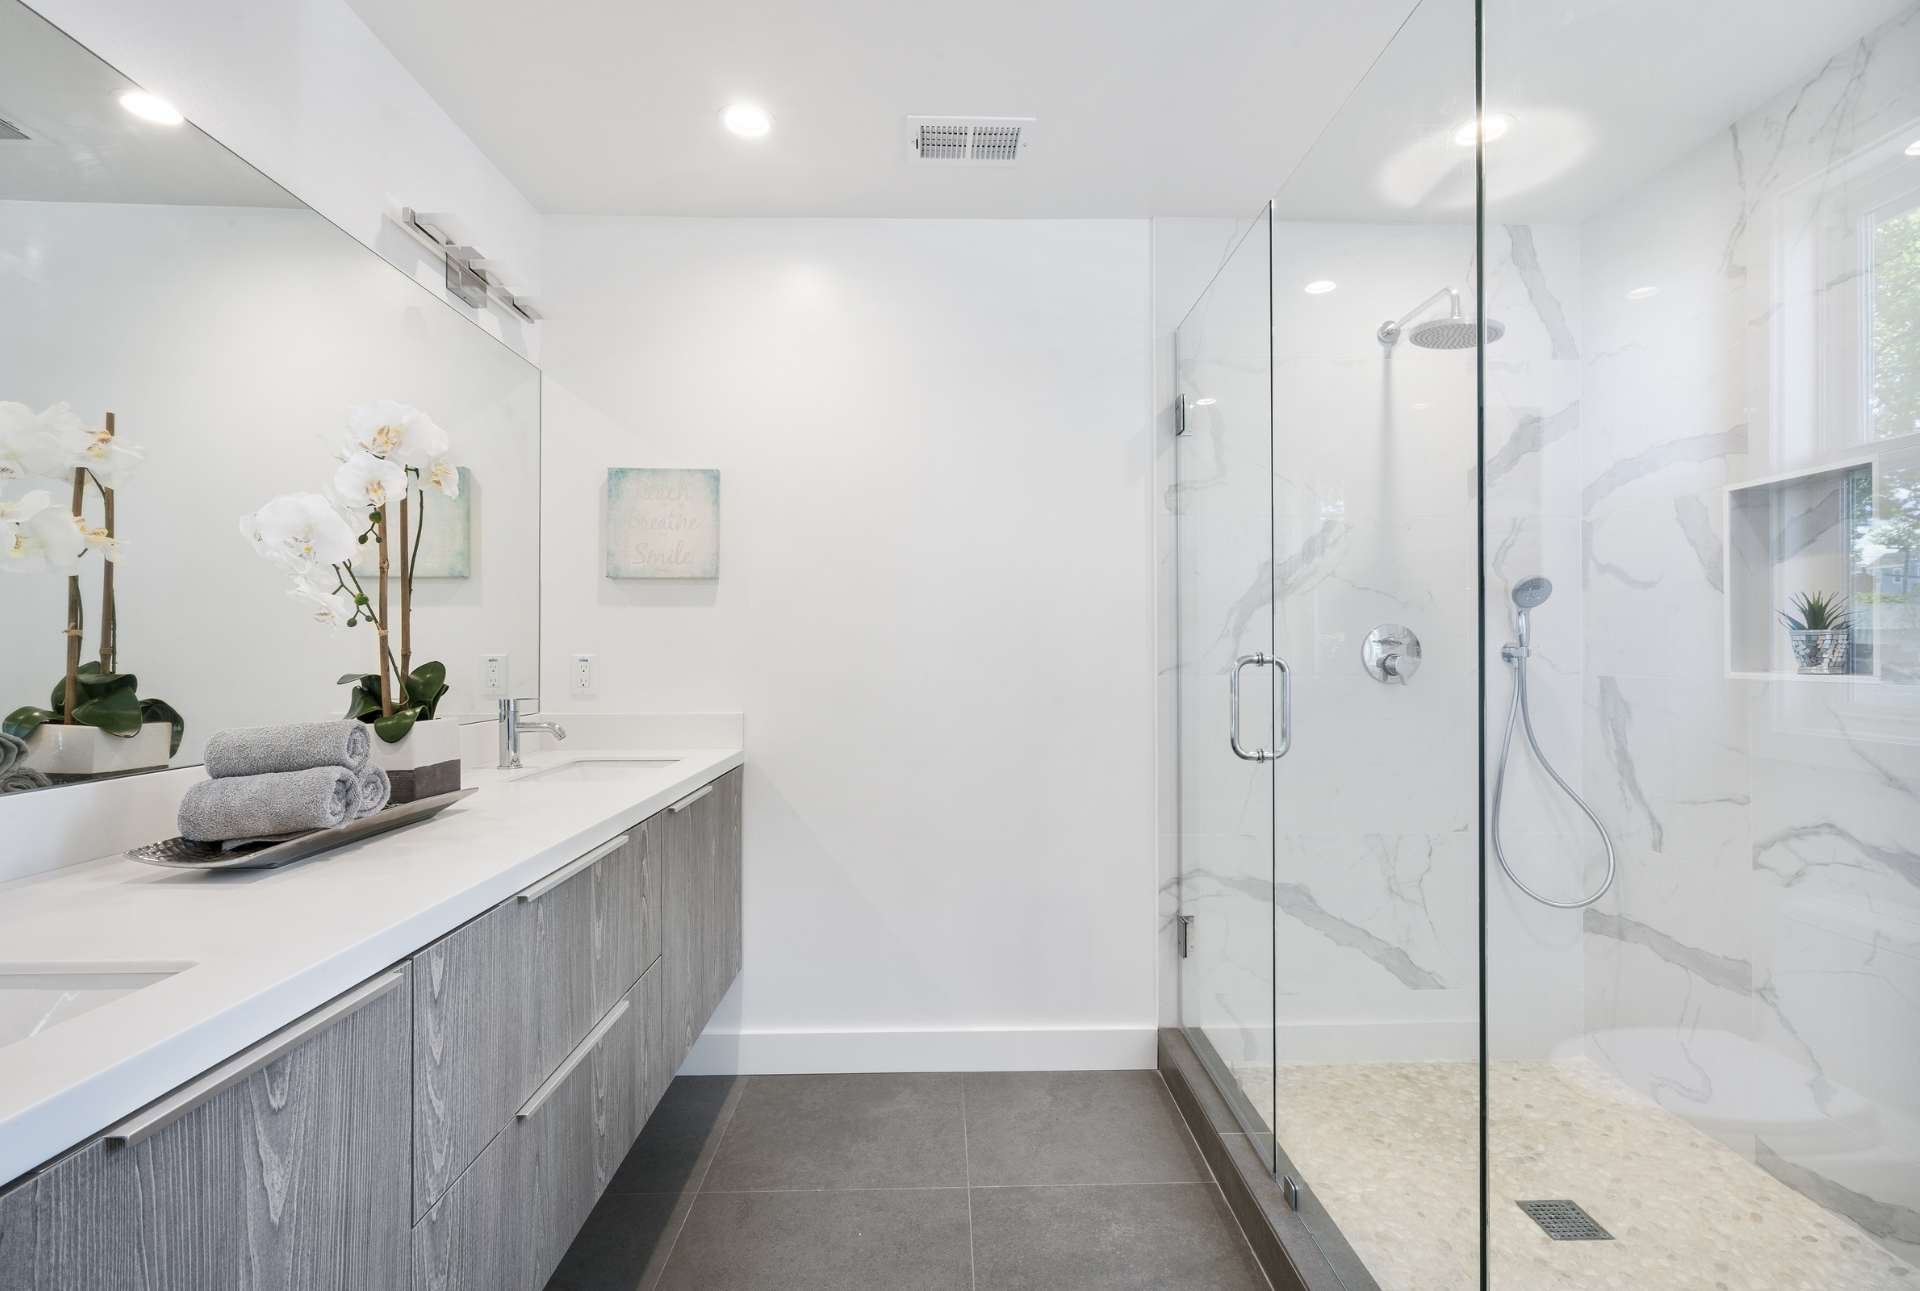 Bathroom redone with modern shower installed